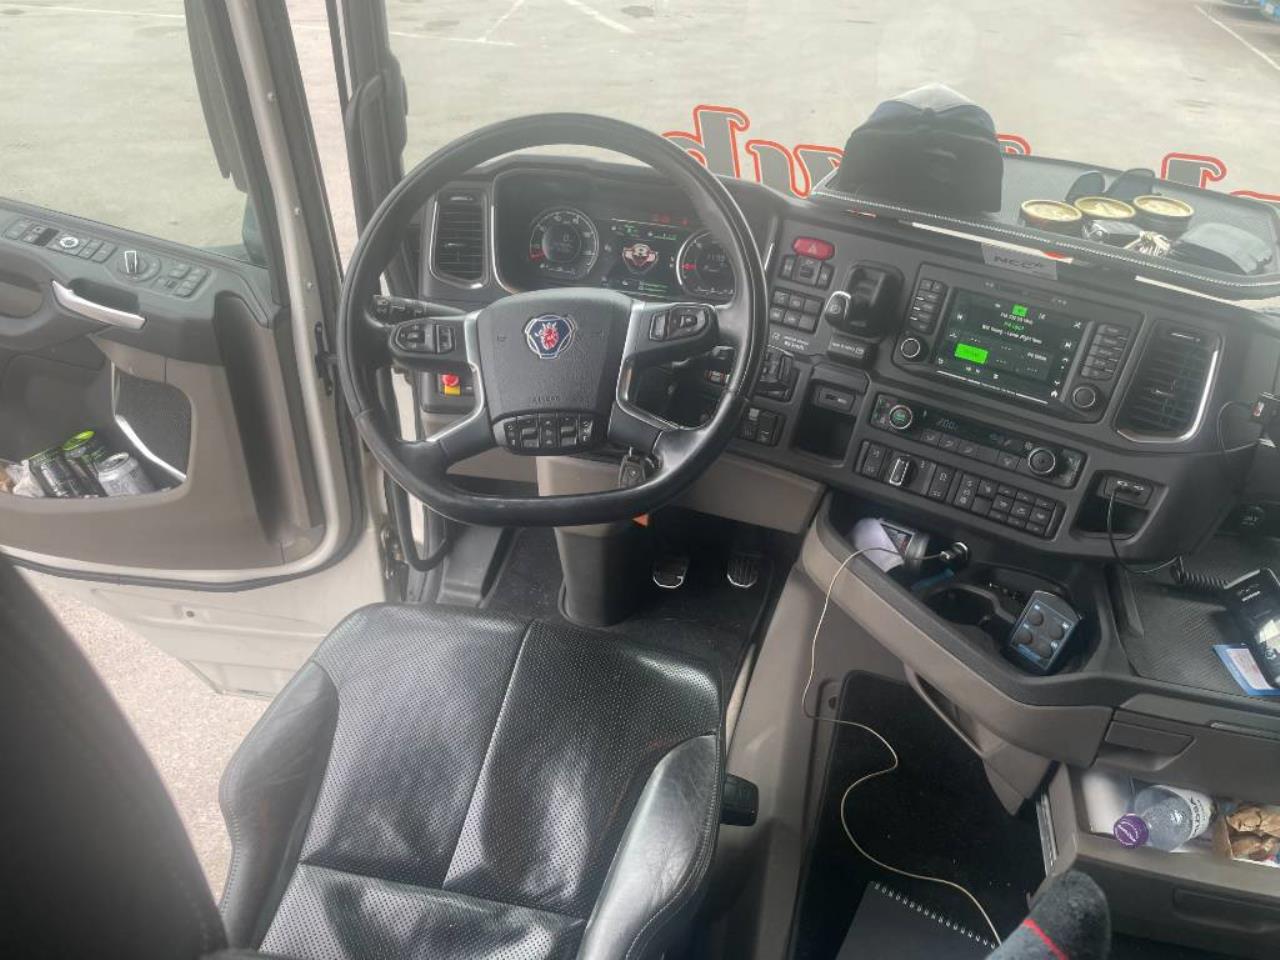 Scania R580 med Kelberg trailer 2019 - Dragbil